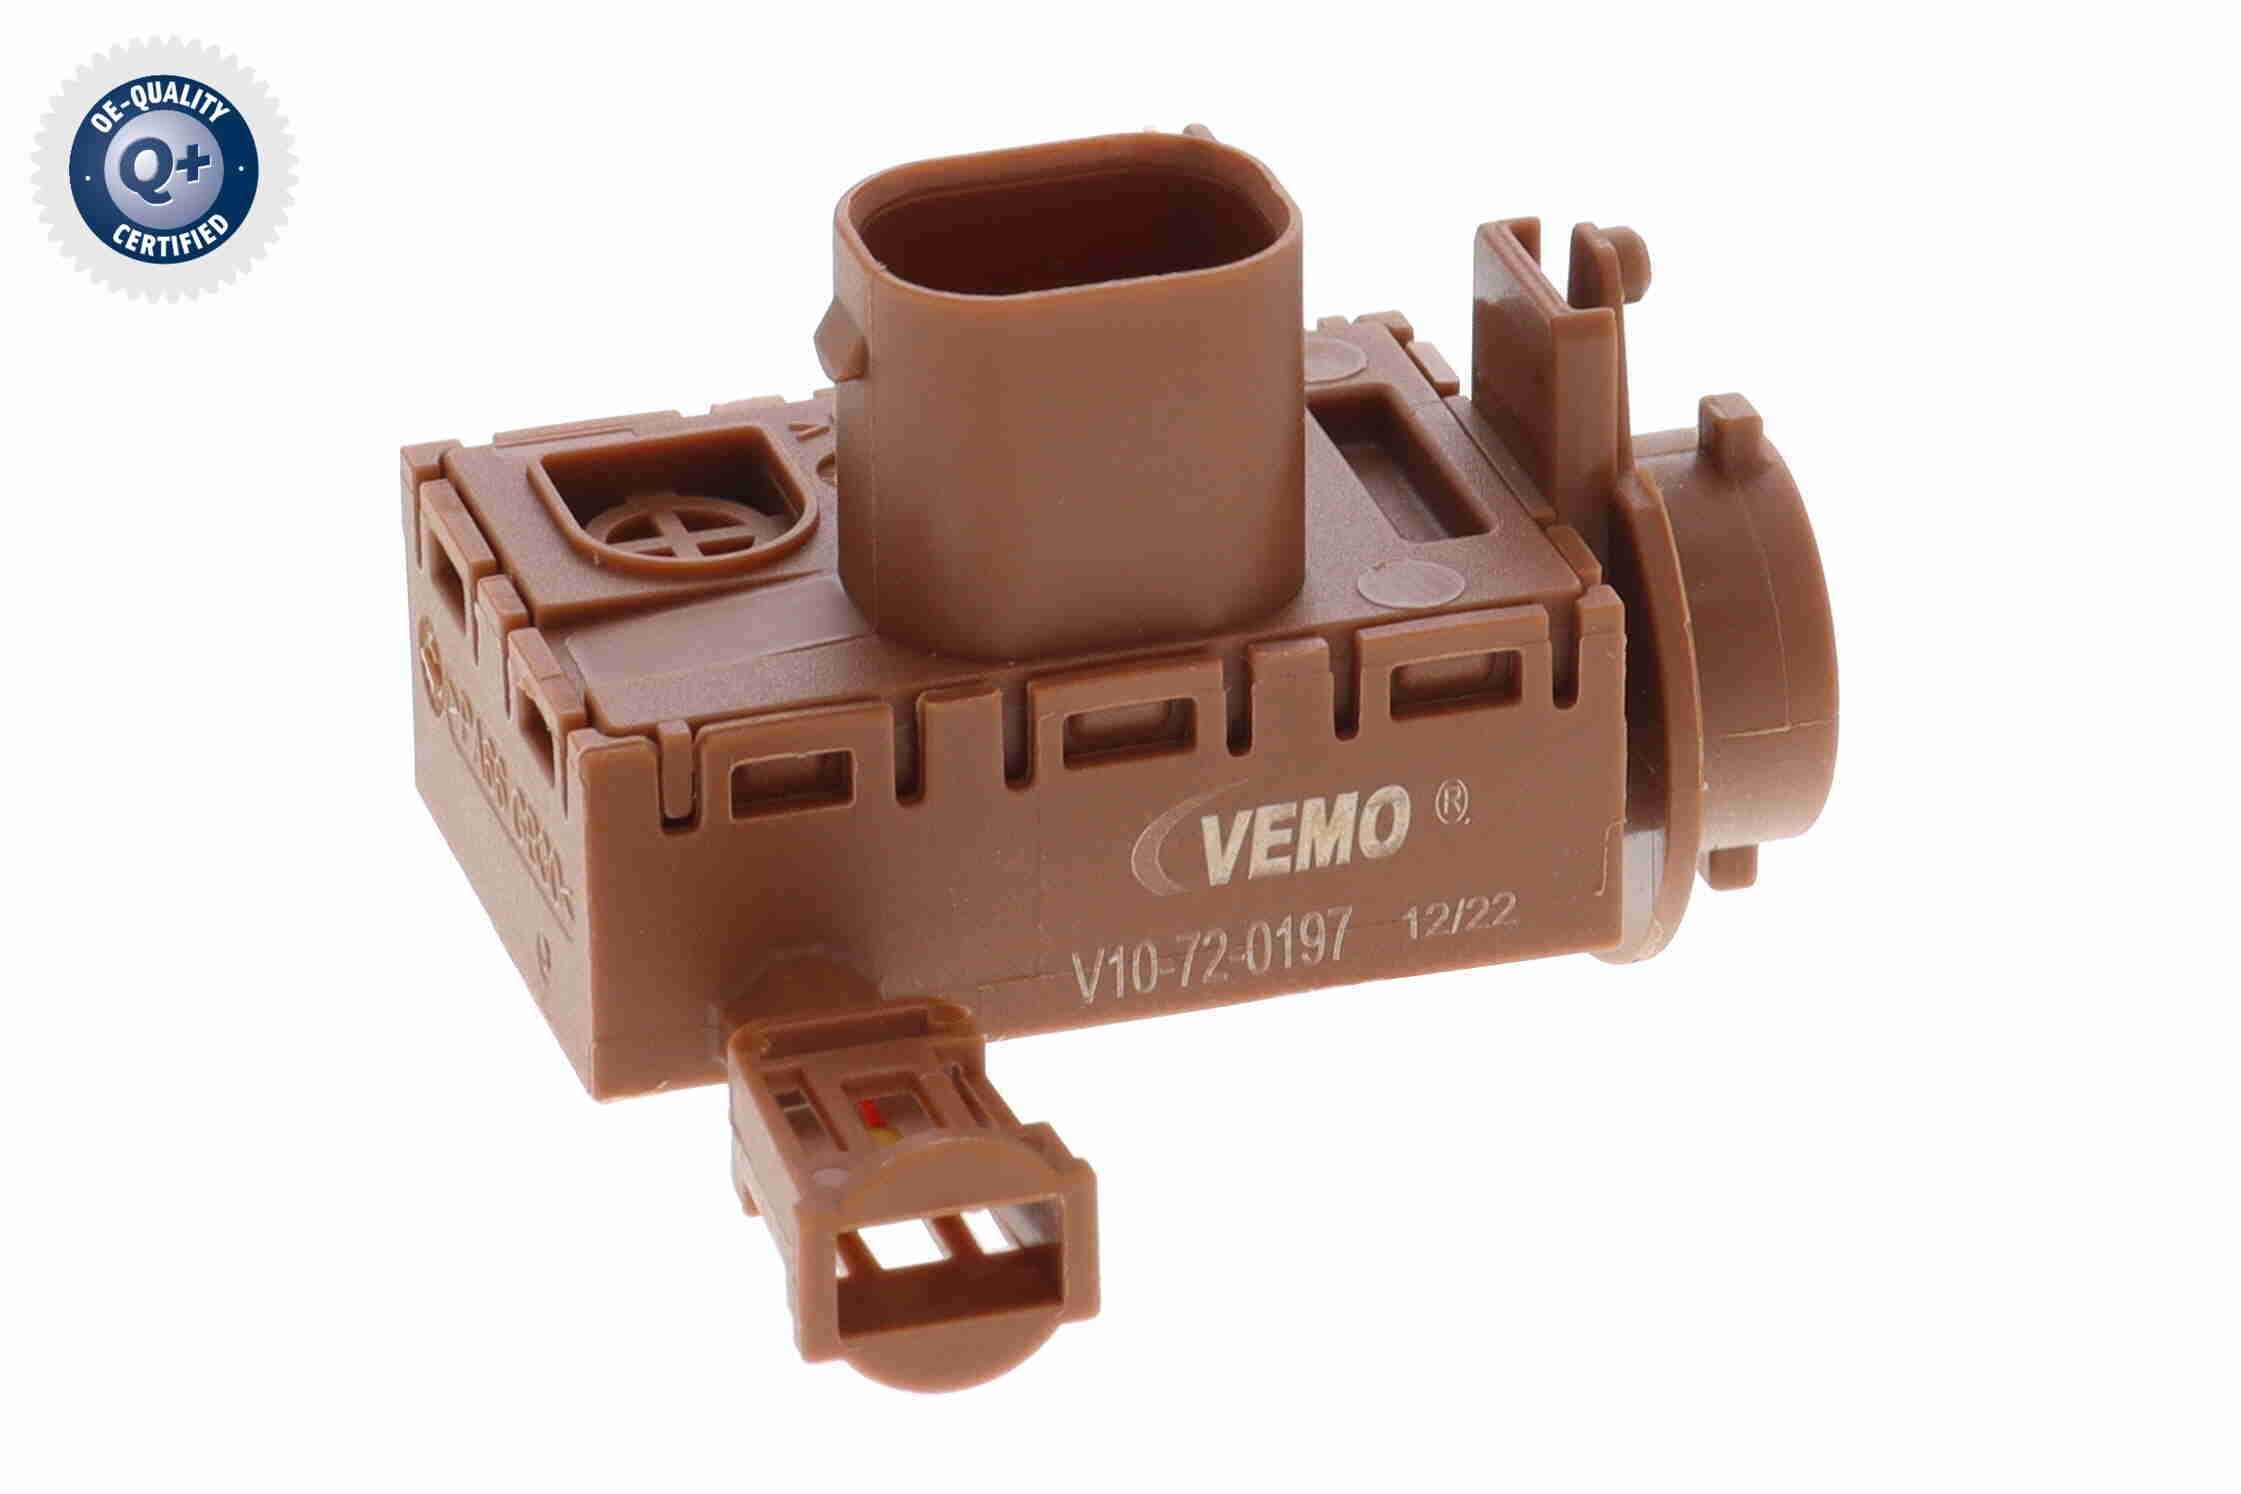 VEMO Air Quality Sensor V10-72-0197 buy